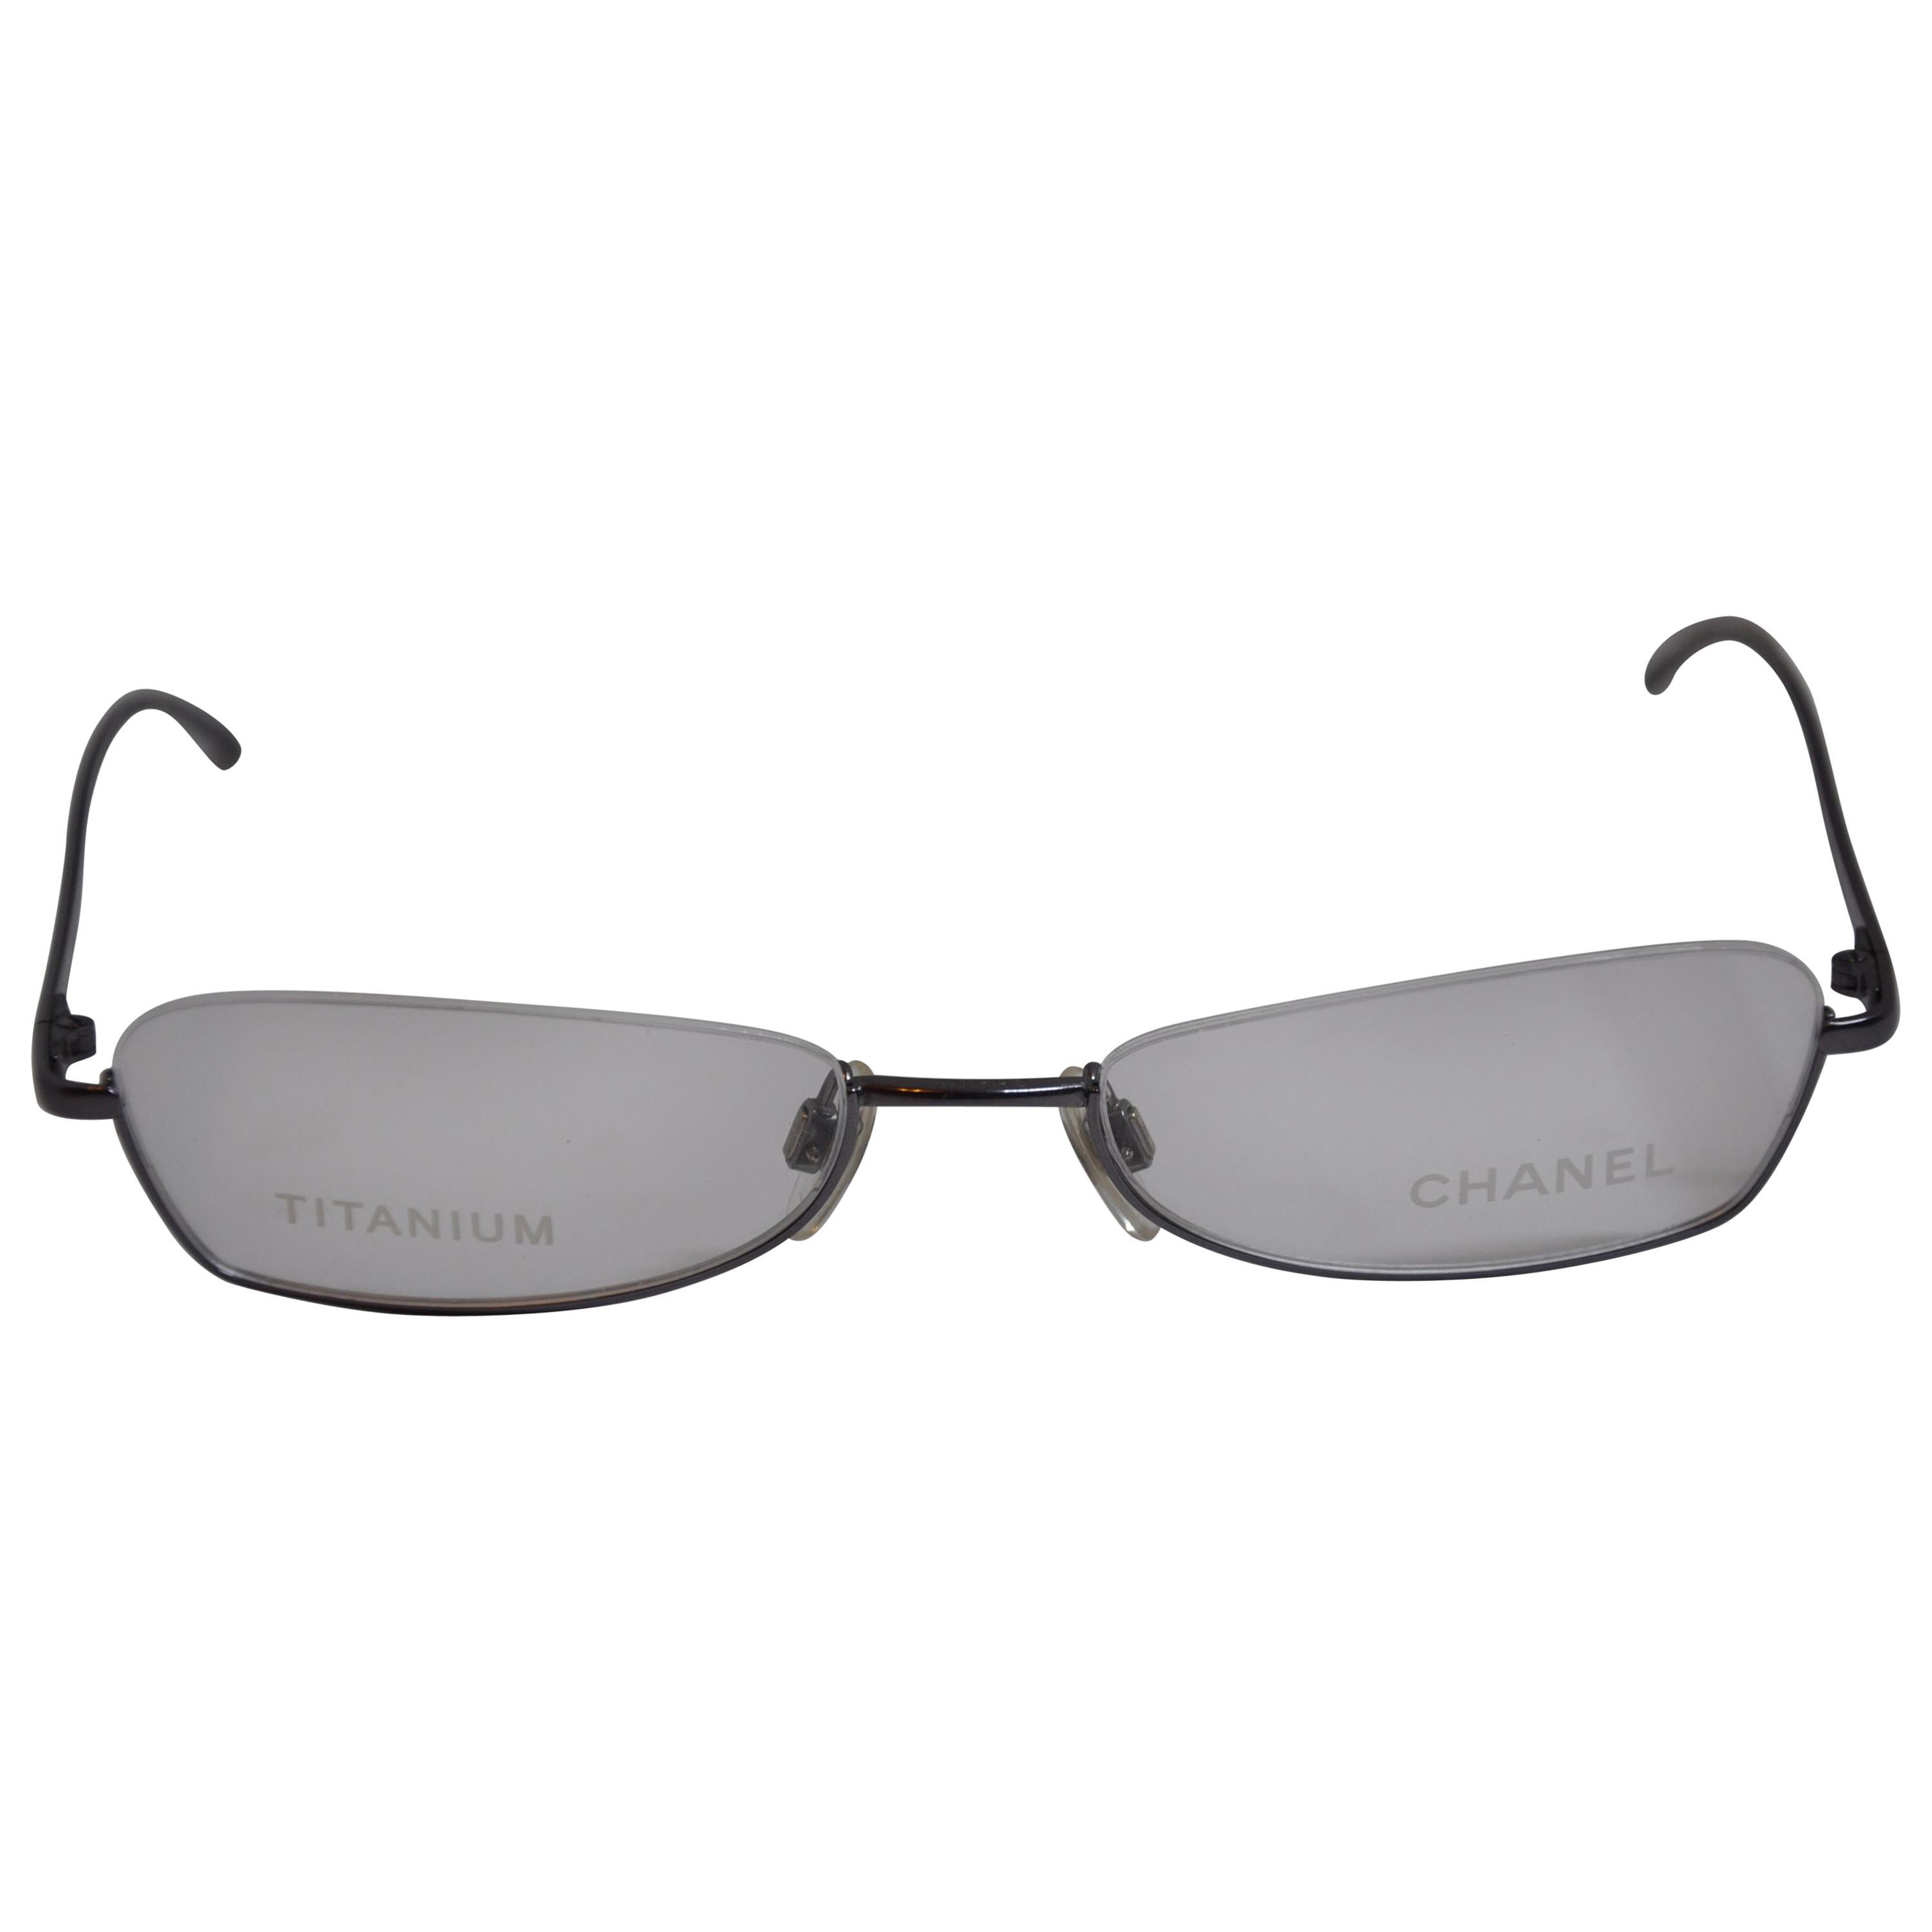 Chanel Titanium Weightless Deep Lavender Half-Frame Reading Glasses